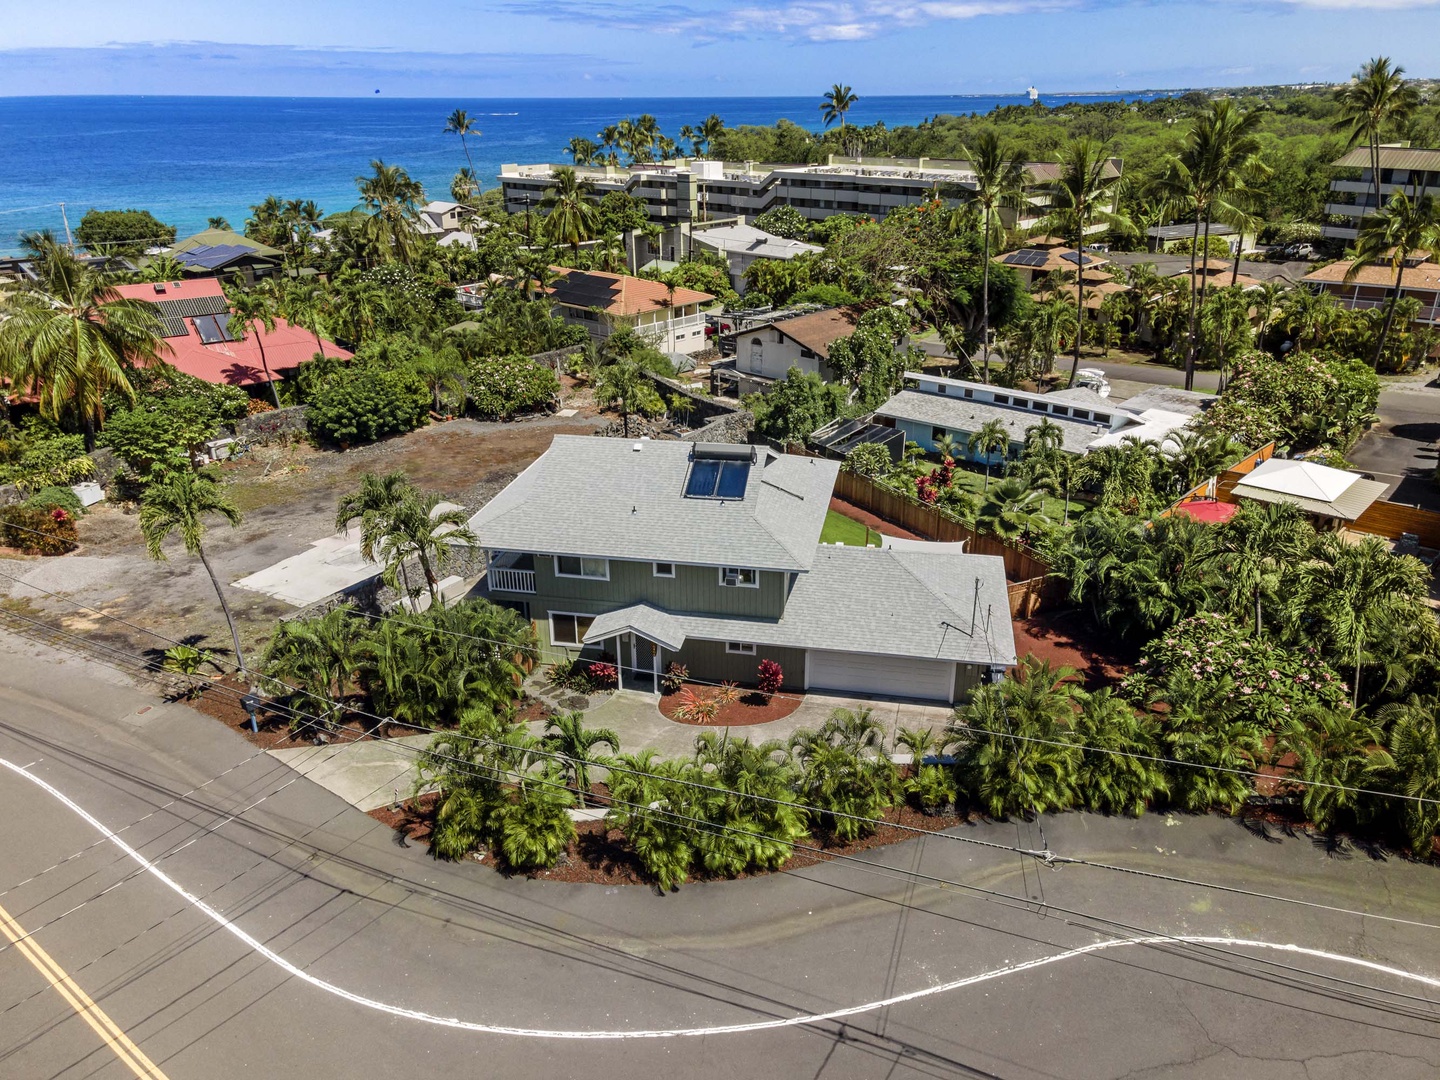 Kailua Kona Vacation Rentals, Hale A Kai - Aerial views of the home and surrounding neighborhood